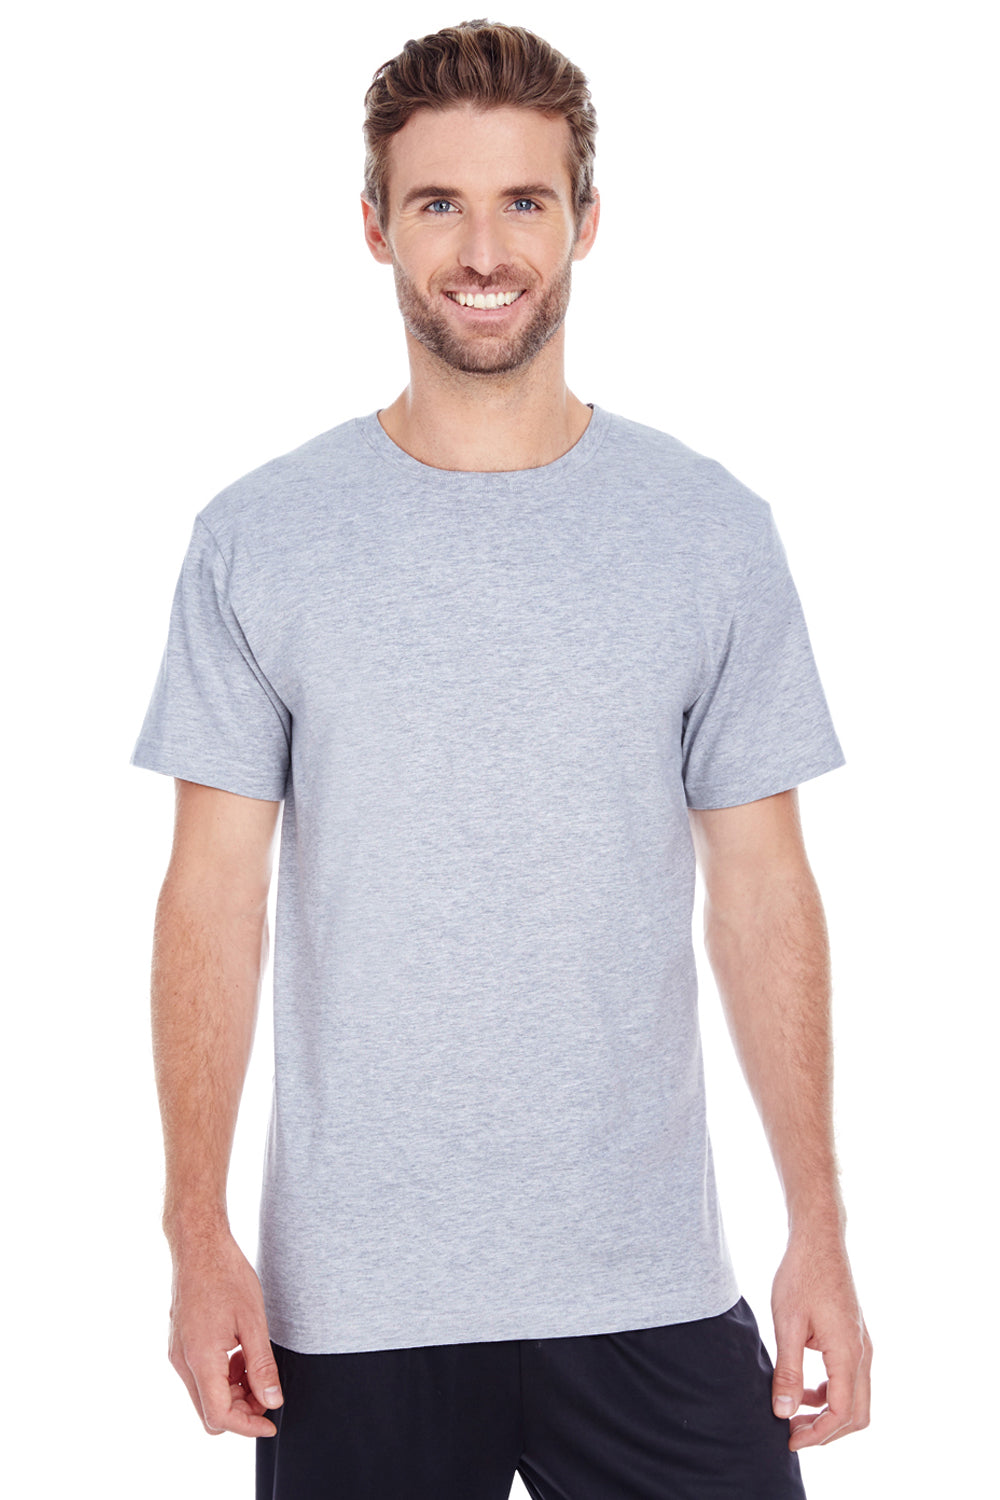 LAT 6980 Mens Premium Jersey Short Sleeve Crewneck T-Shirt Heather Grey Front